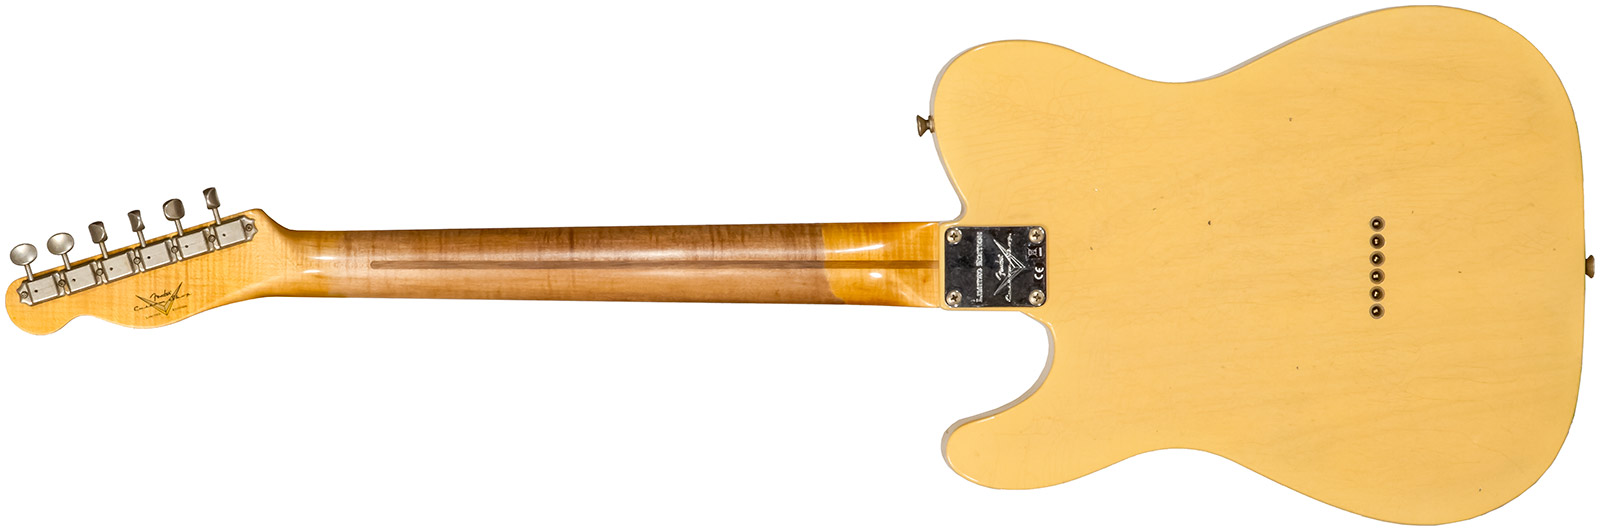 Fender Custom Shop Tele 1953 2s Ht Mn #r126793 - Journeyman Relic Aged Nocaster Blonde - Guitare Électrique Forme Tel - Variation 1